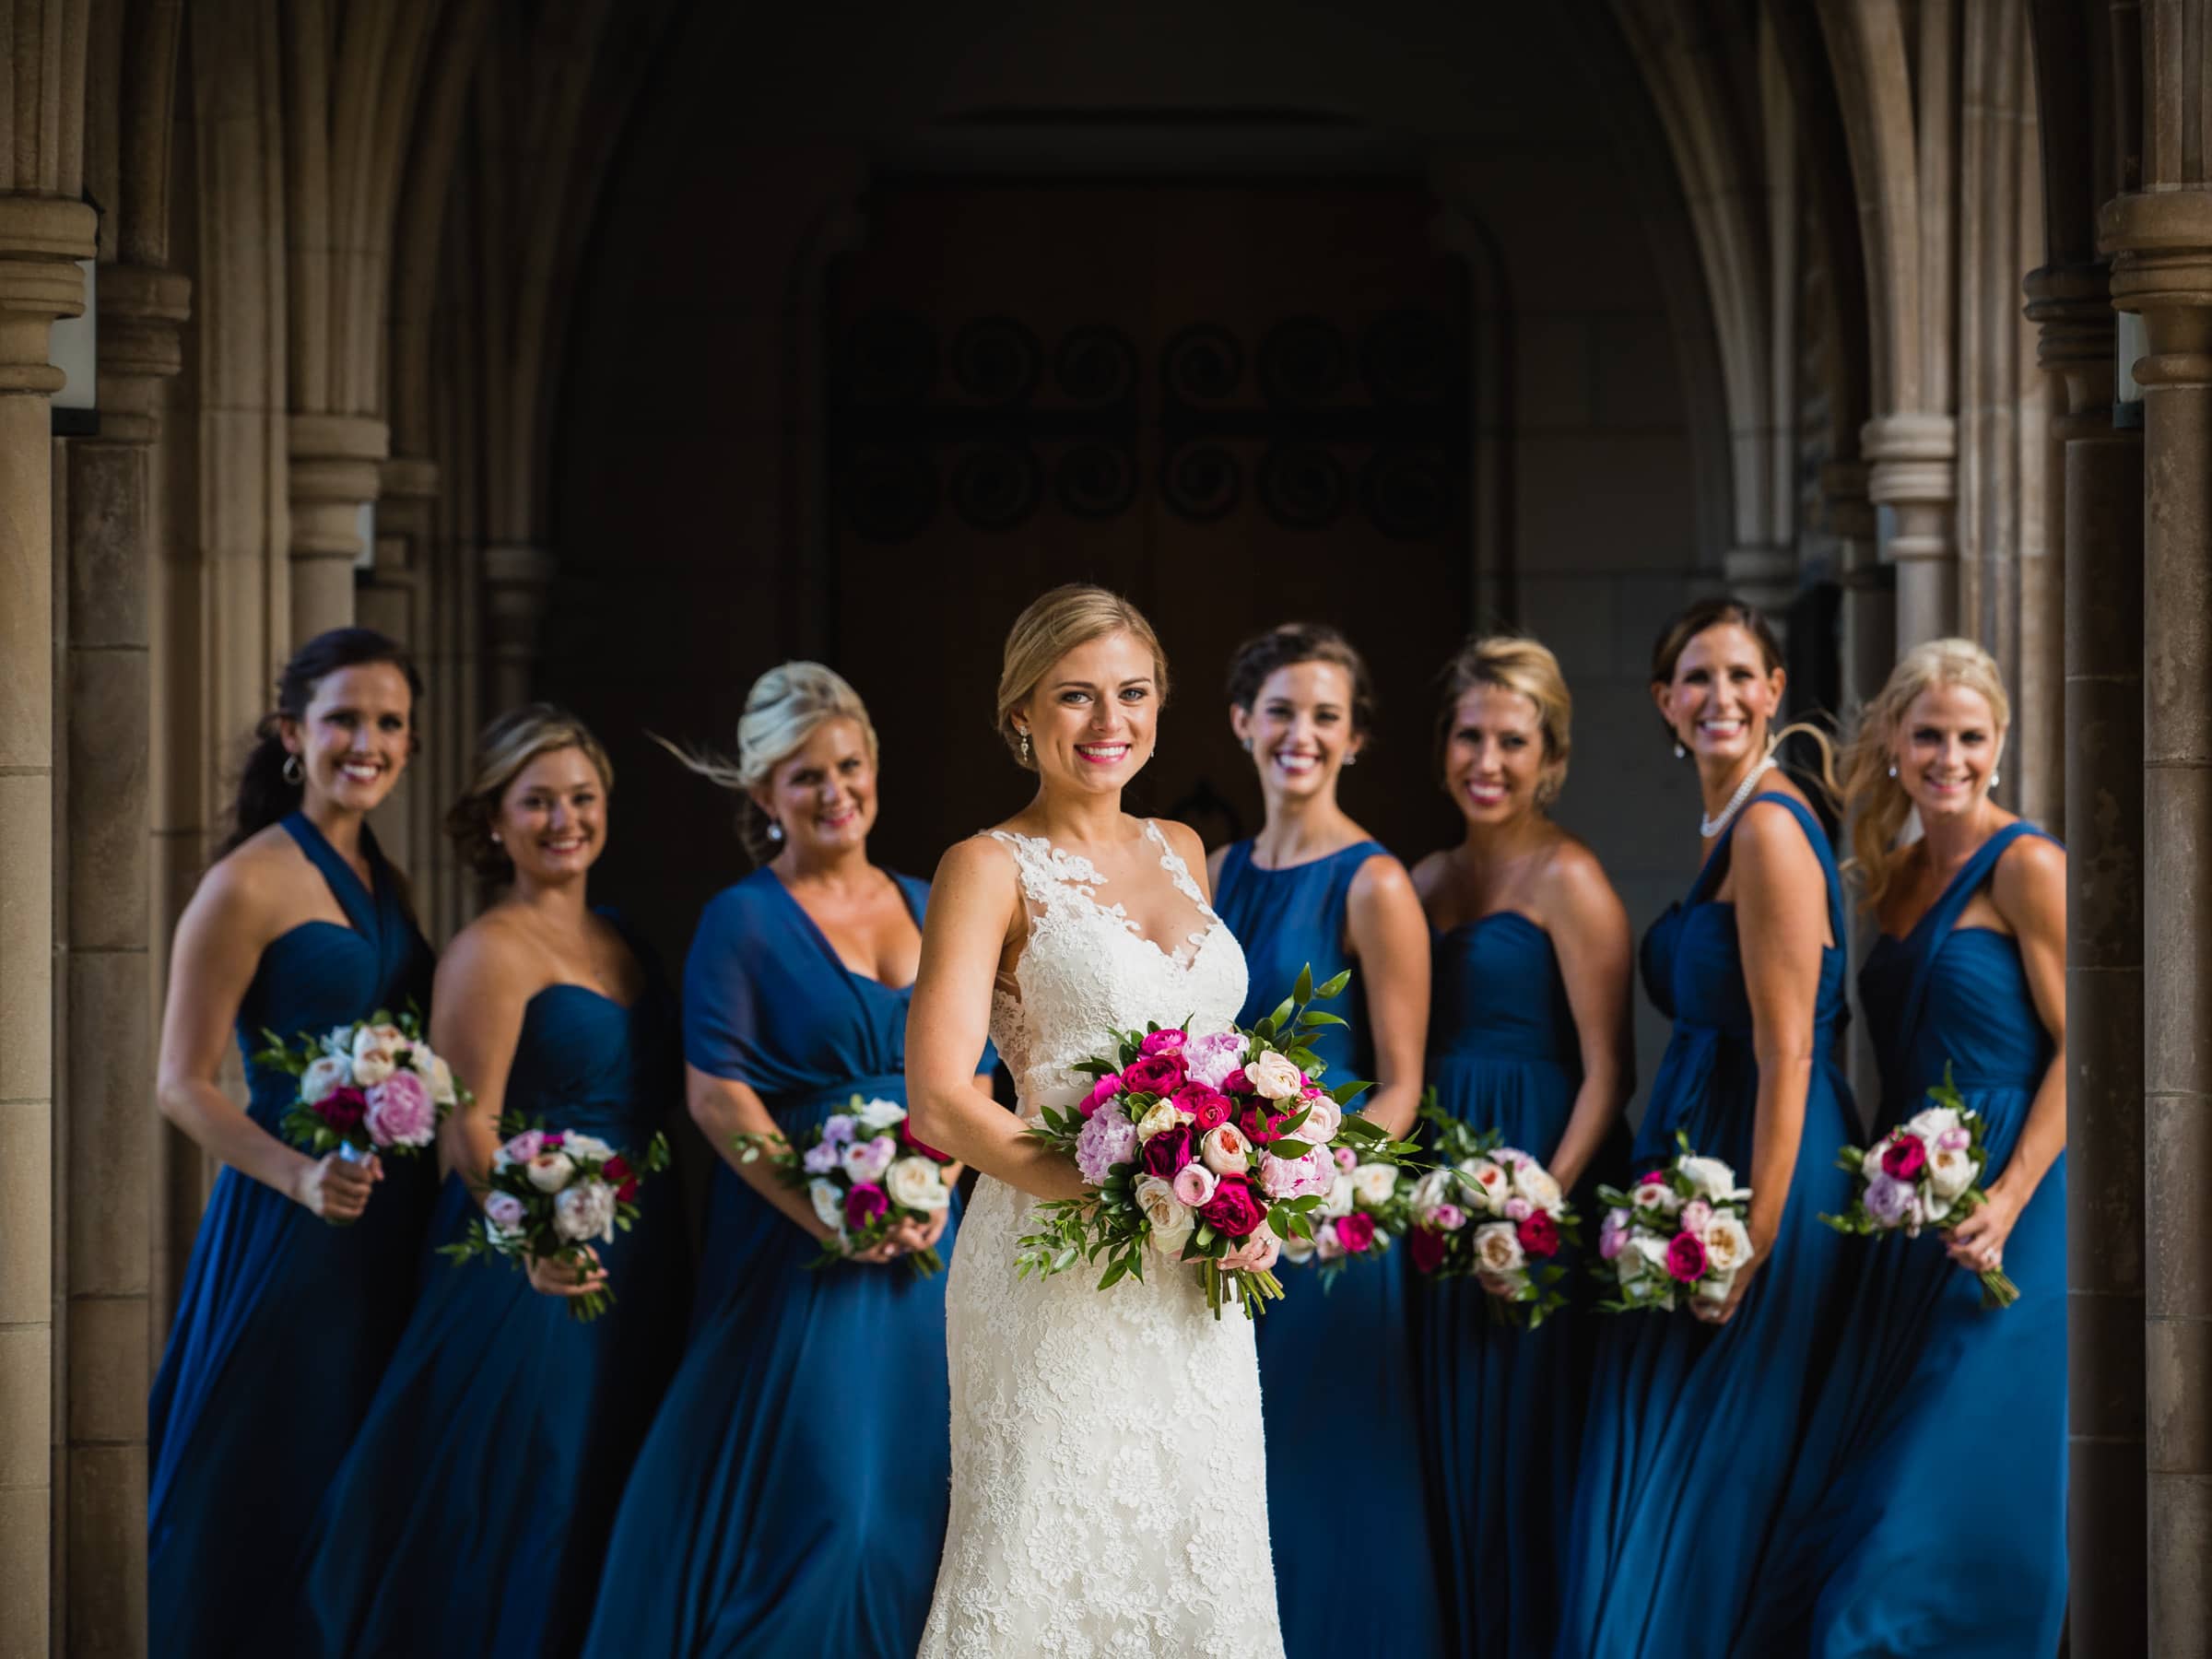 Duke Chapel wedding Photo - Beautiful Bride & Bridesmaids in Arcades by Joe Payne